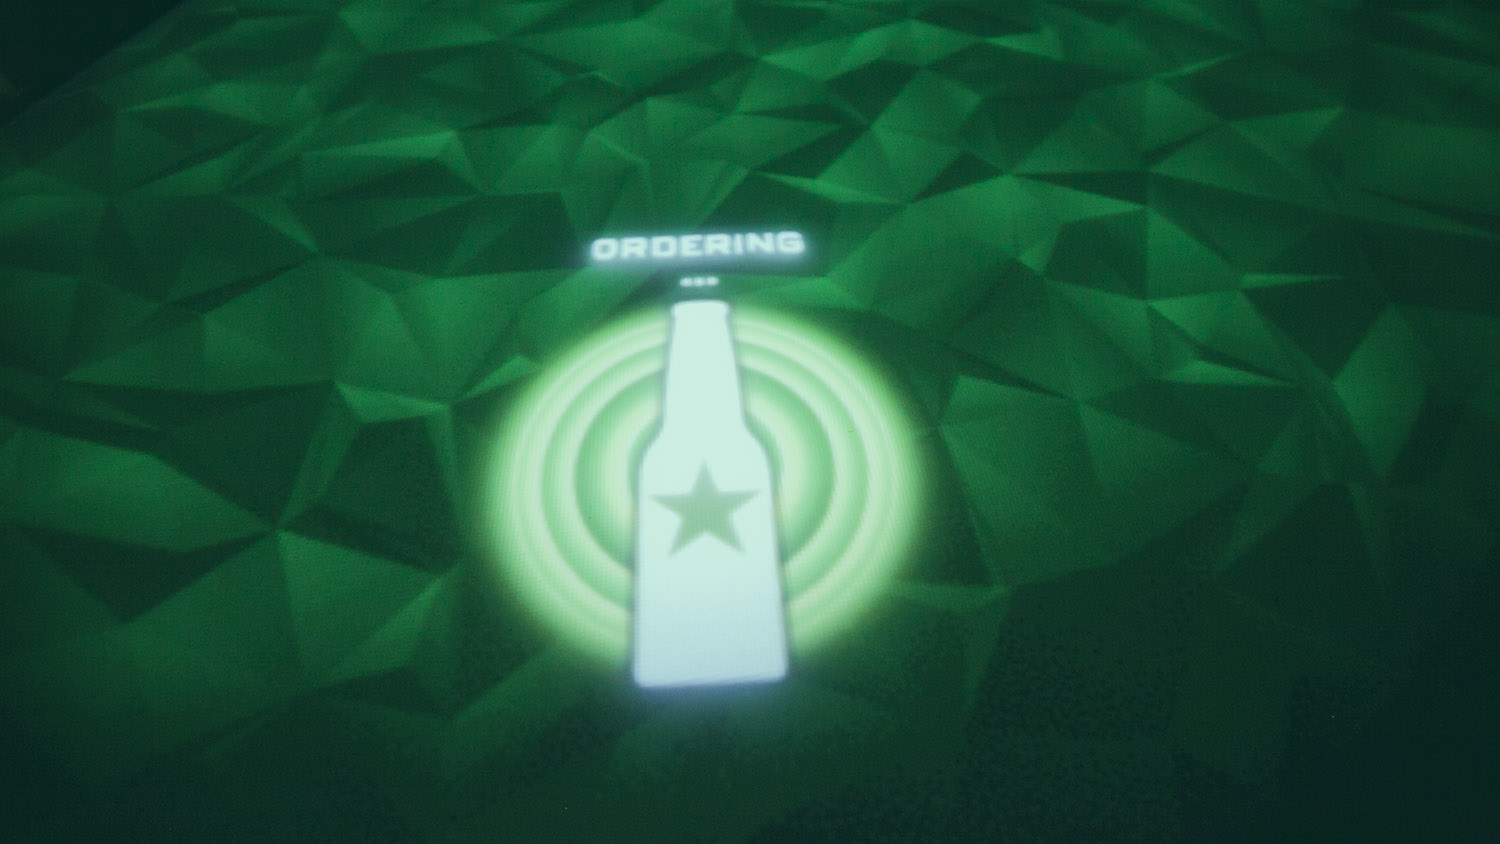 Heineken Interactive Bar - interactive multi-touch bar surface